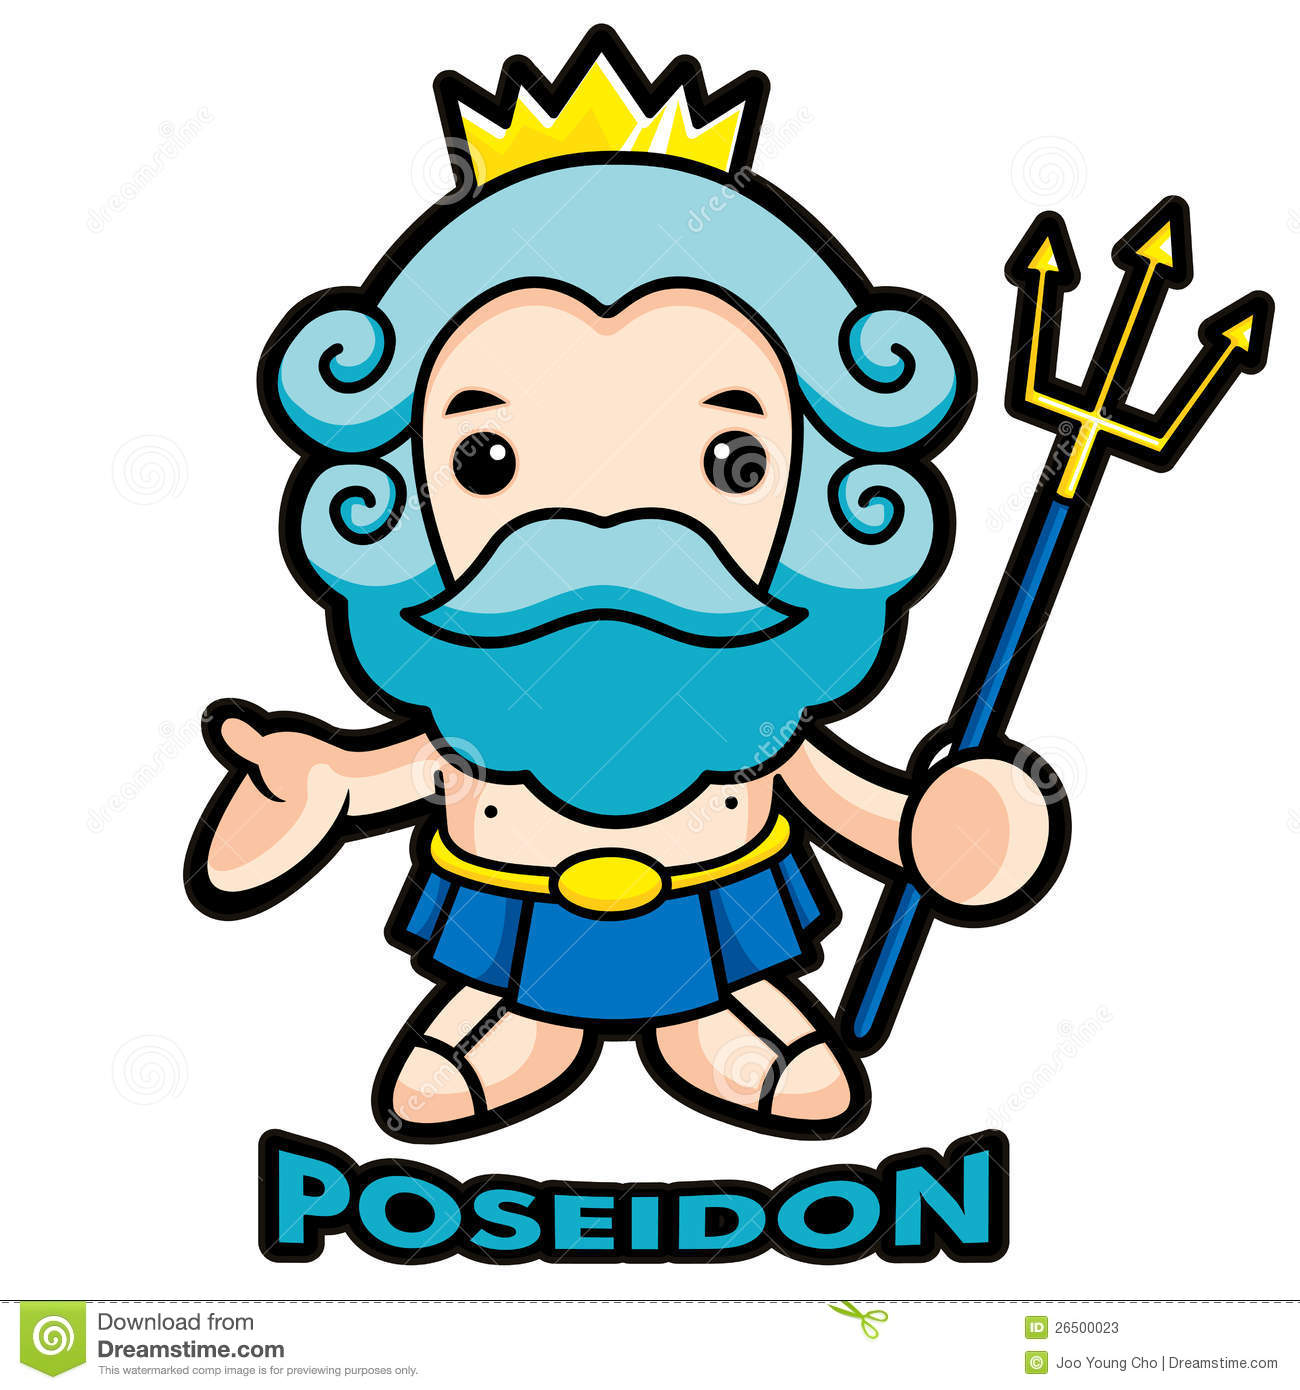 Poseidon clipart #1, Download drawings